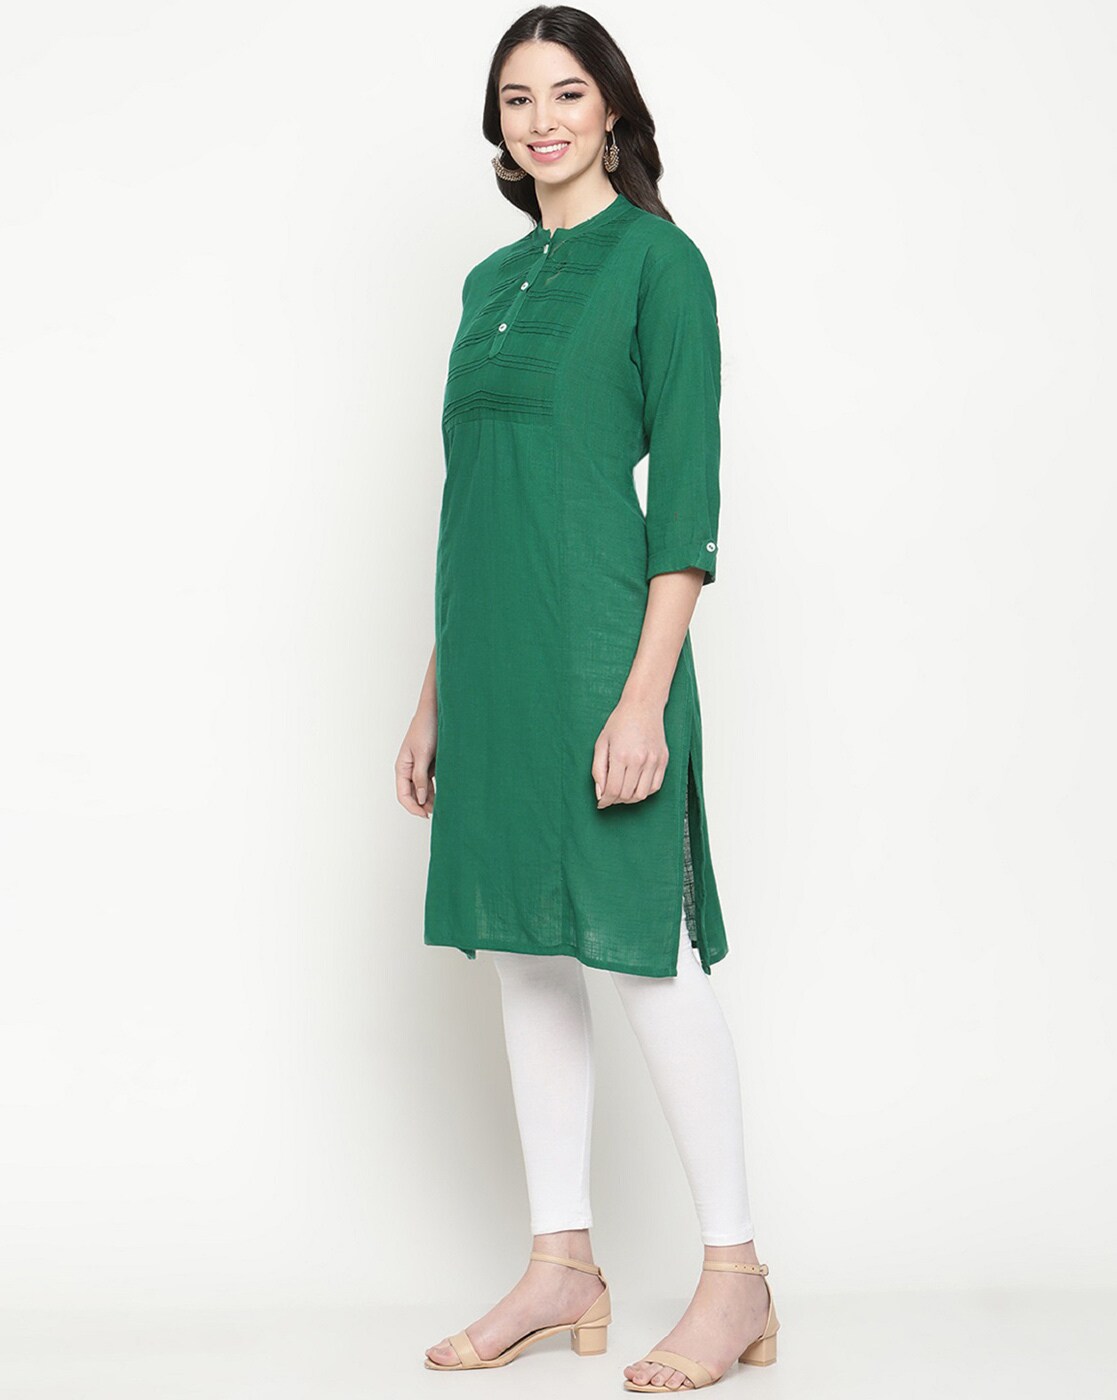 Indira Apparel Basics Dailywear Colorful Cotton Kurti Collection Online Buy